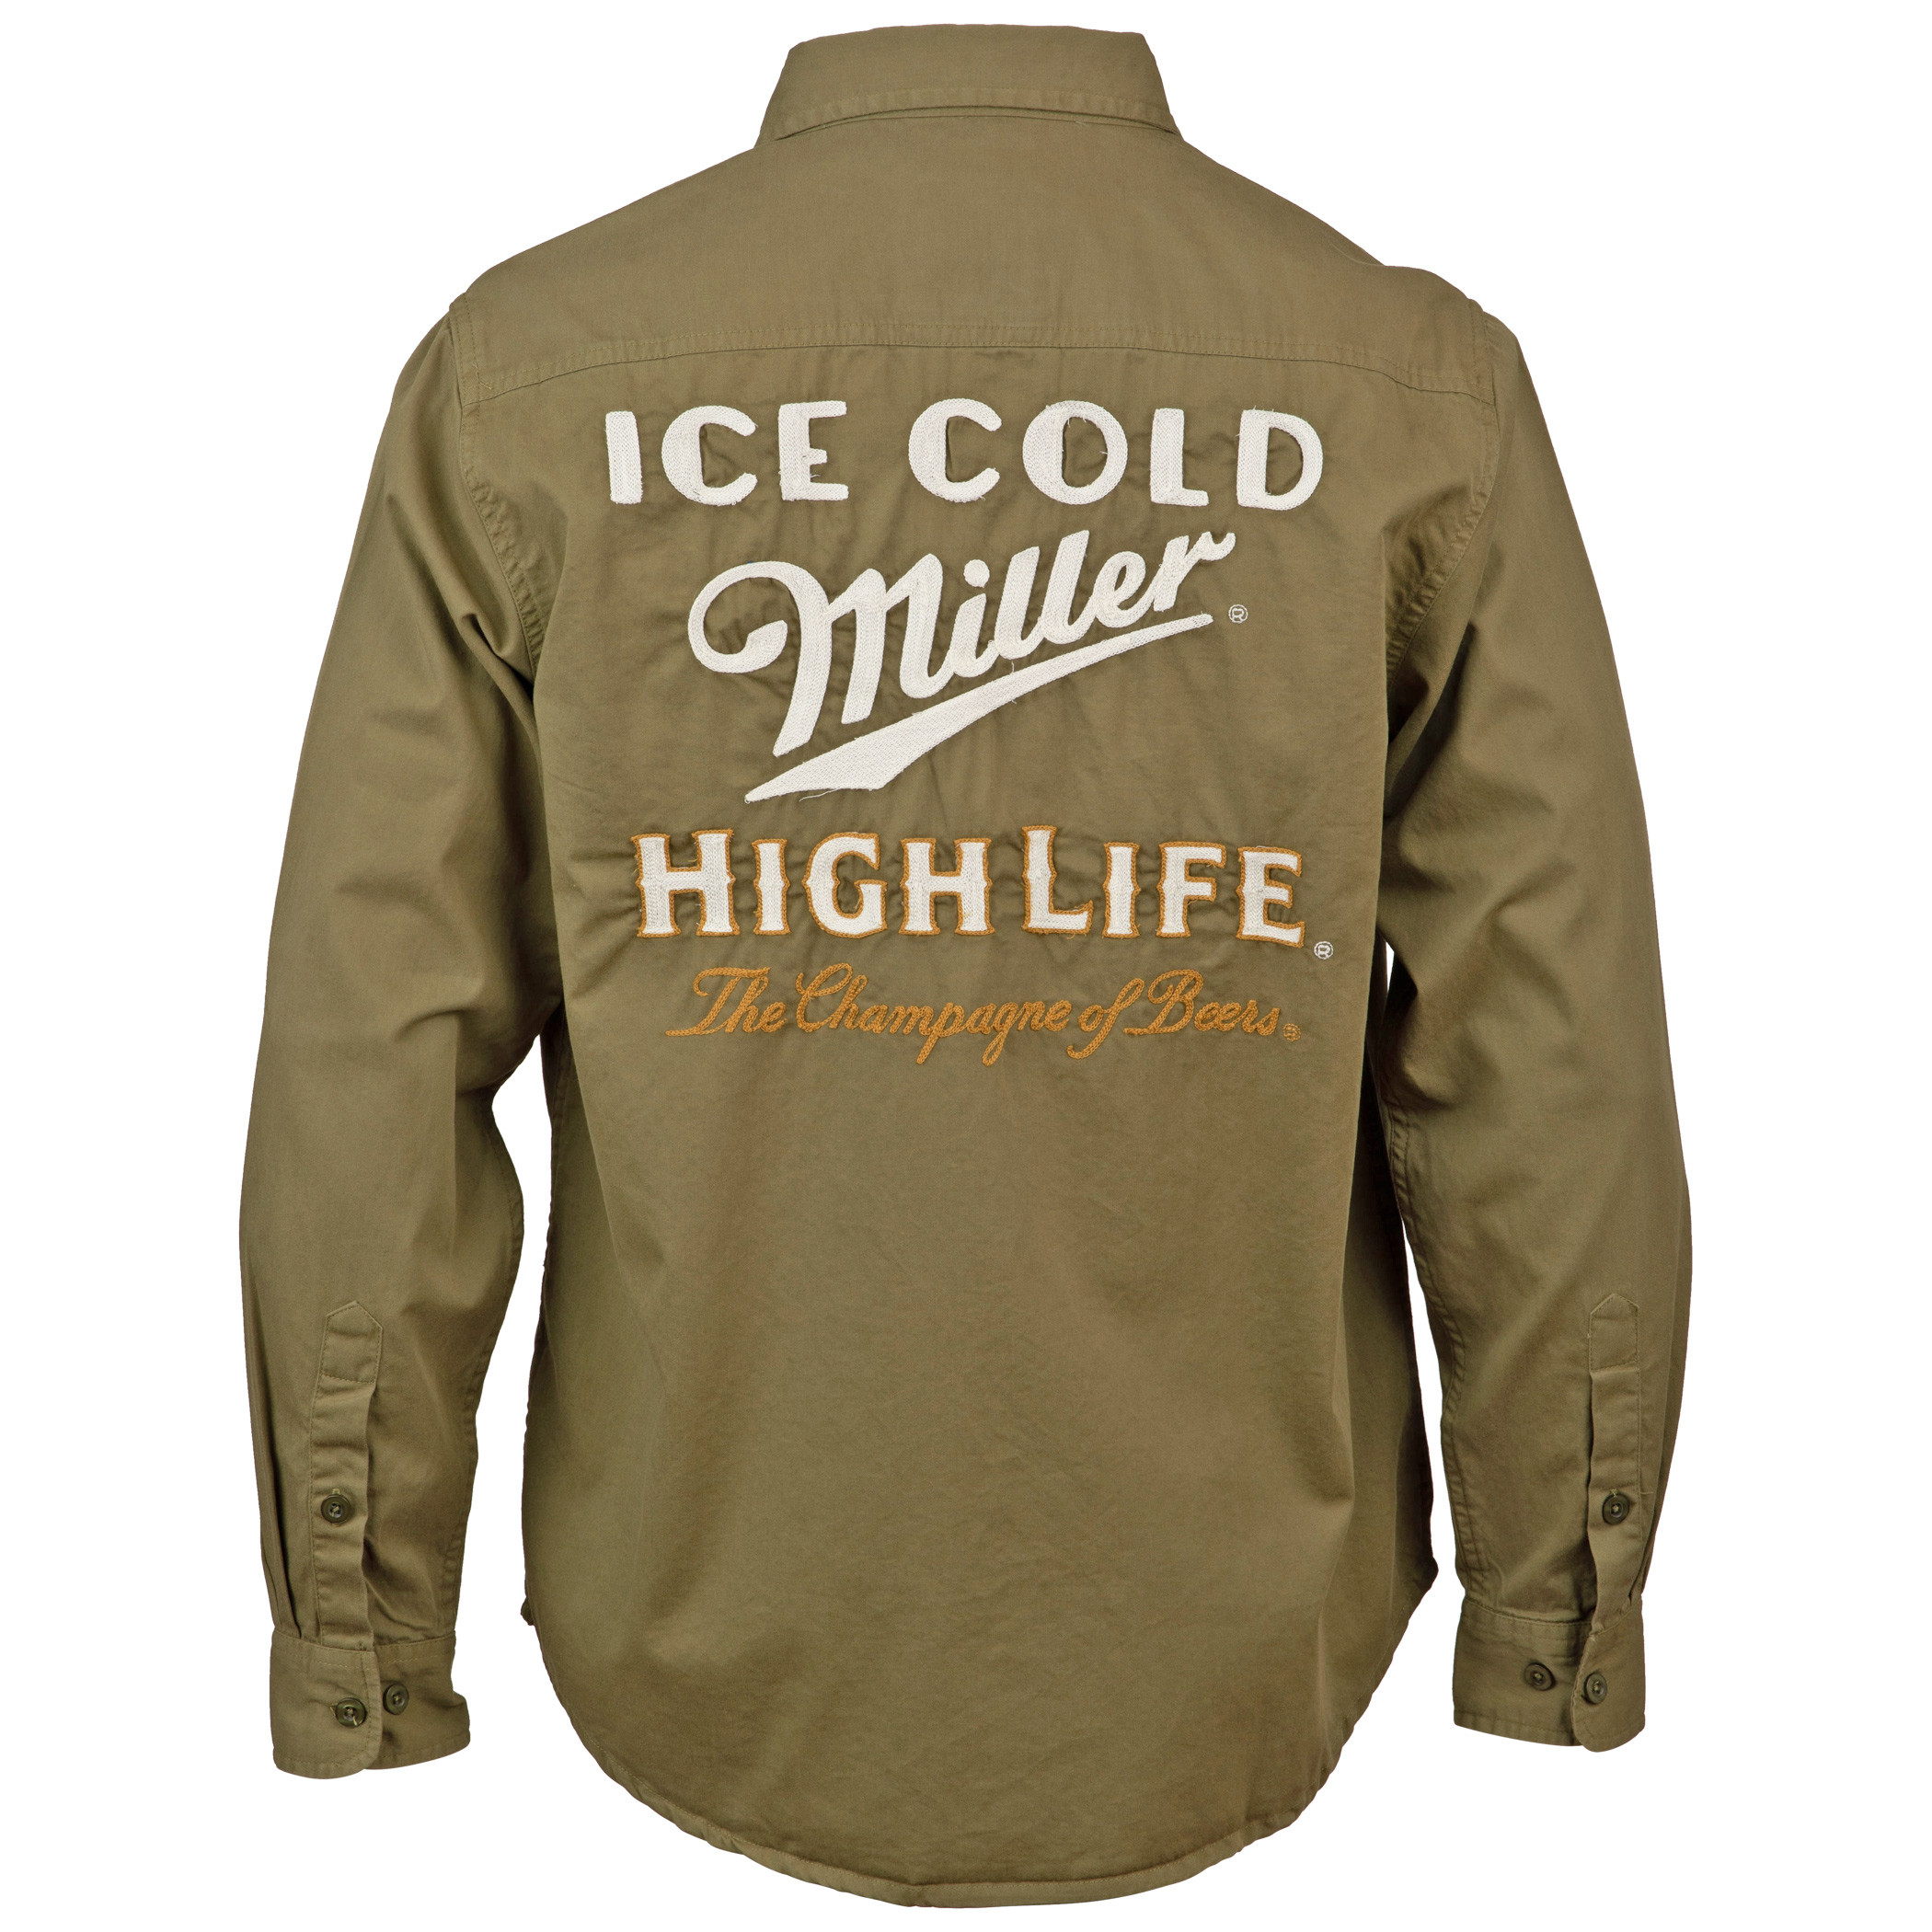 Miller High Life Button Down Collared Shirt